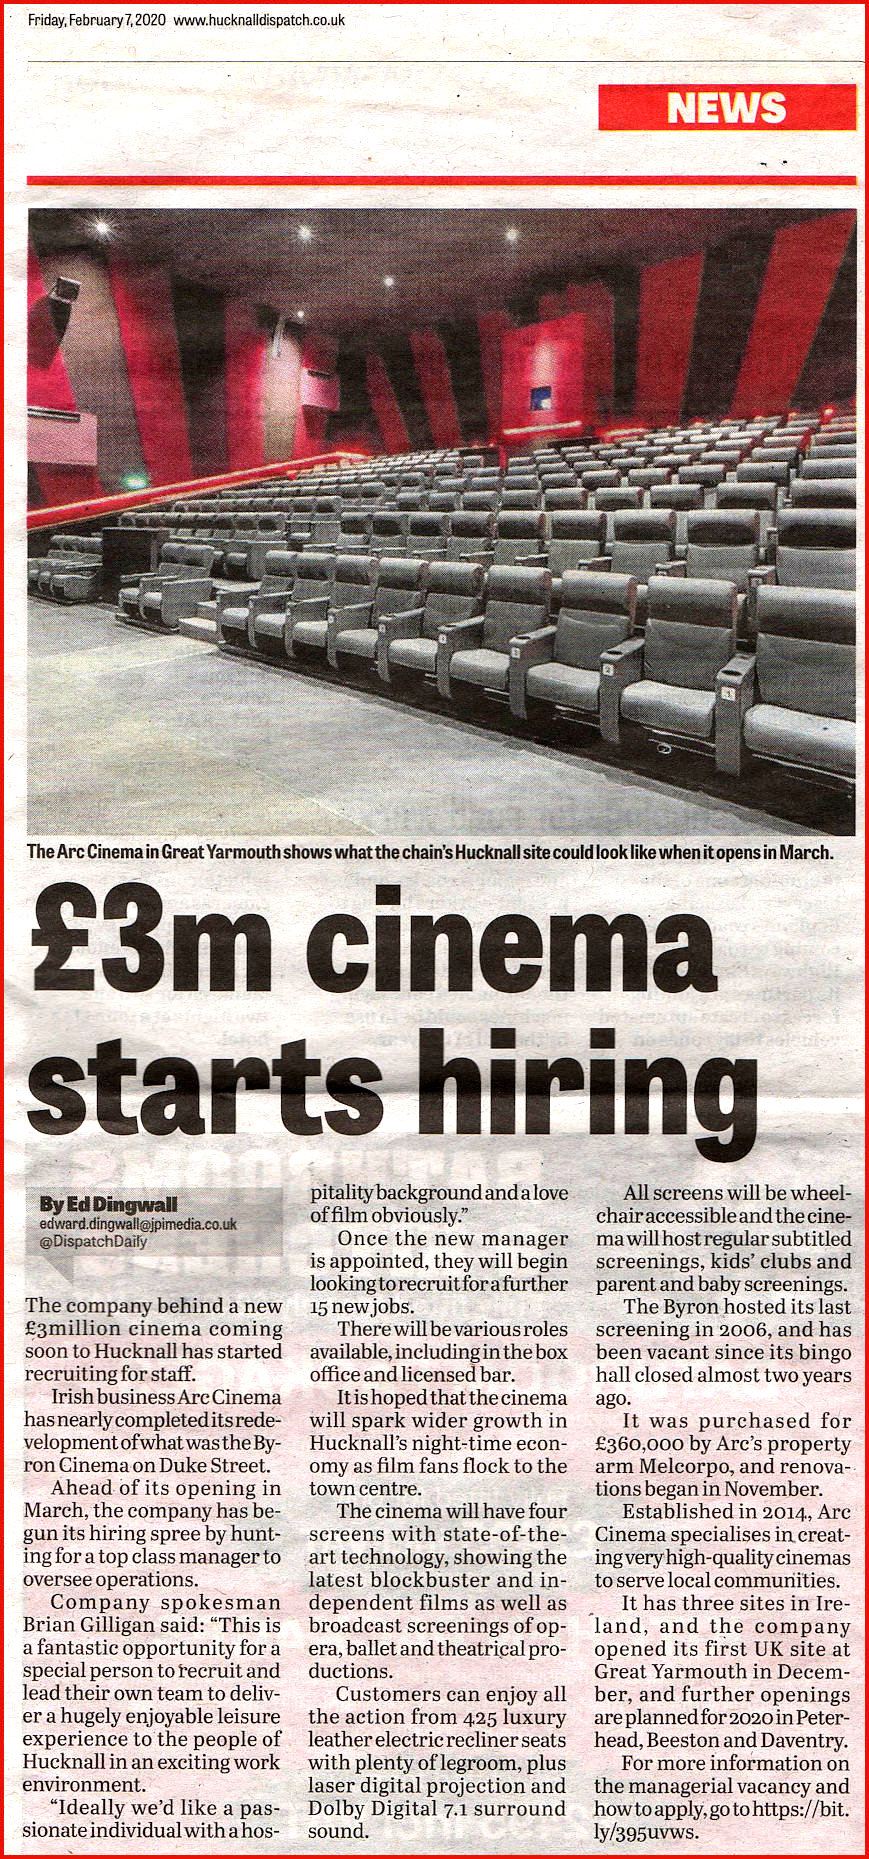 Buron starts hiring cinema staff